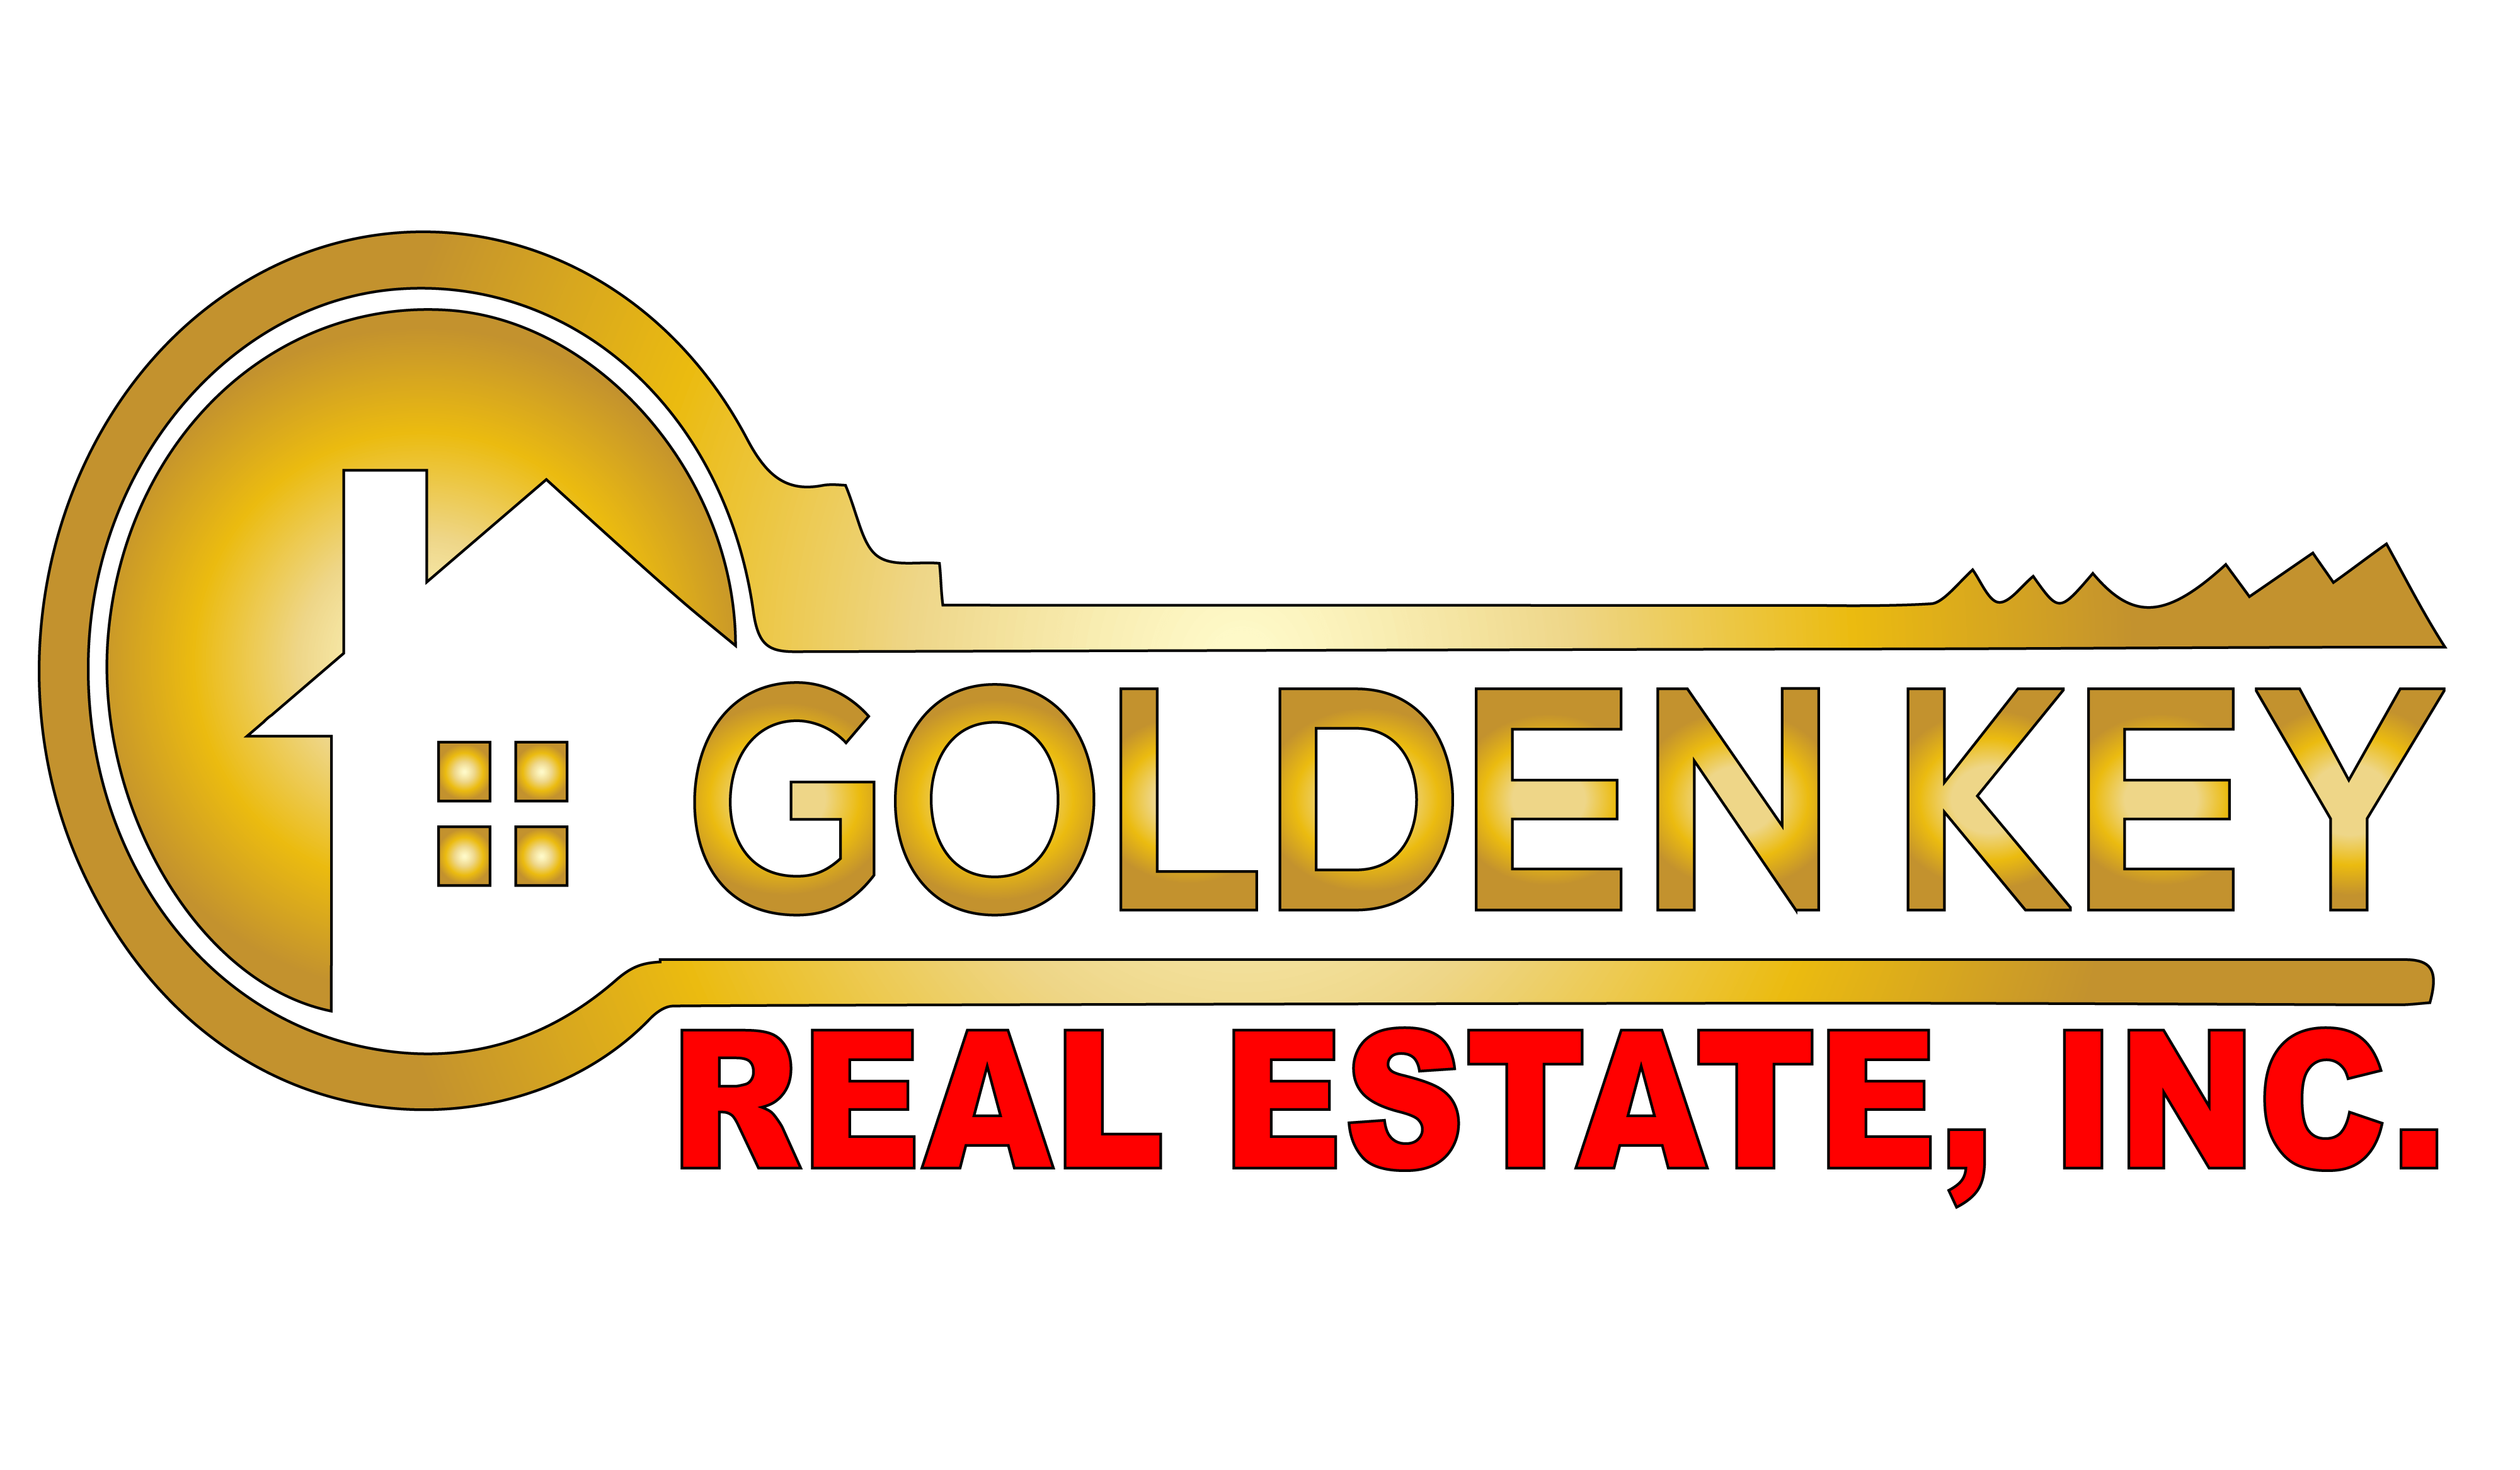 Key Real Estate Logo - REALTORS in the Bay Area. Golden Key Real Estate, Inc. Ikenna